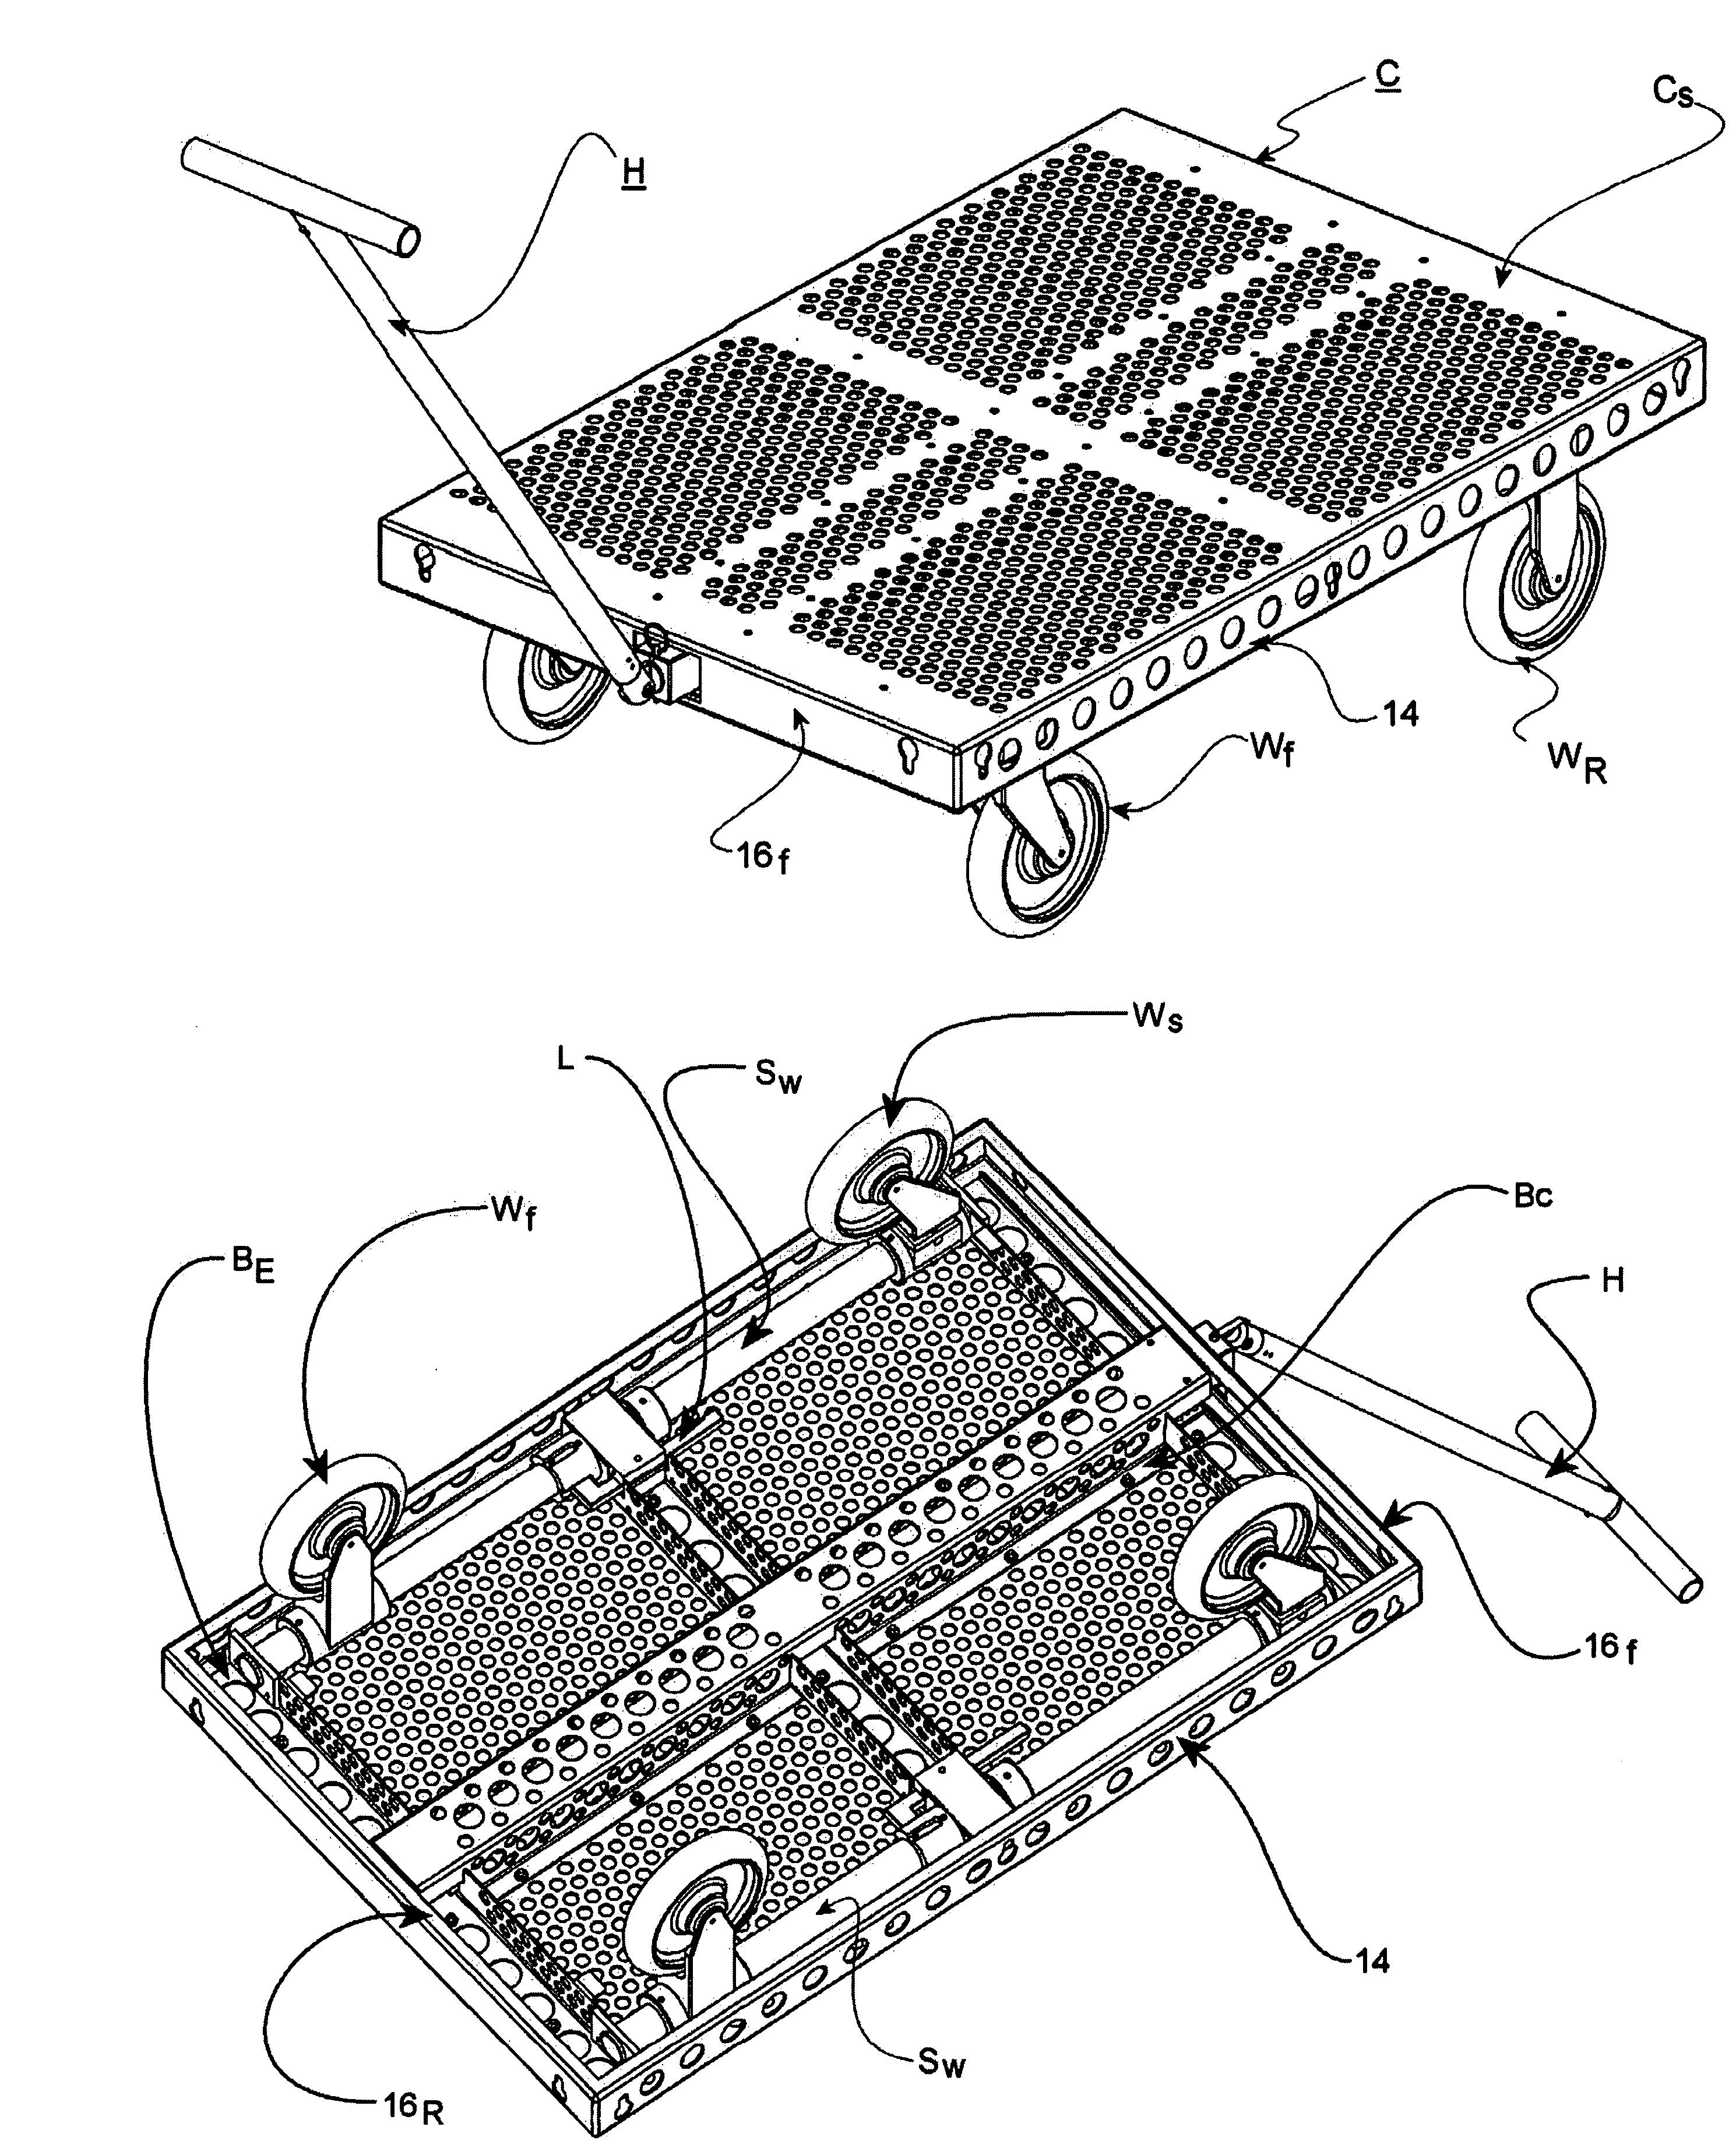 Multi-purpose cart assembly